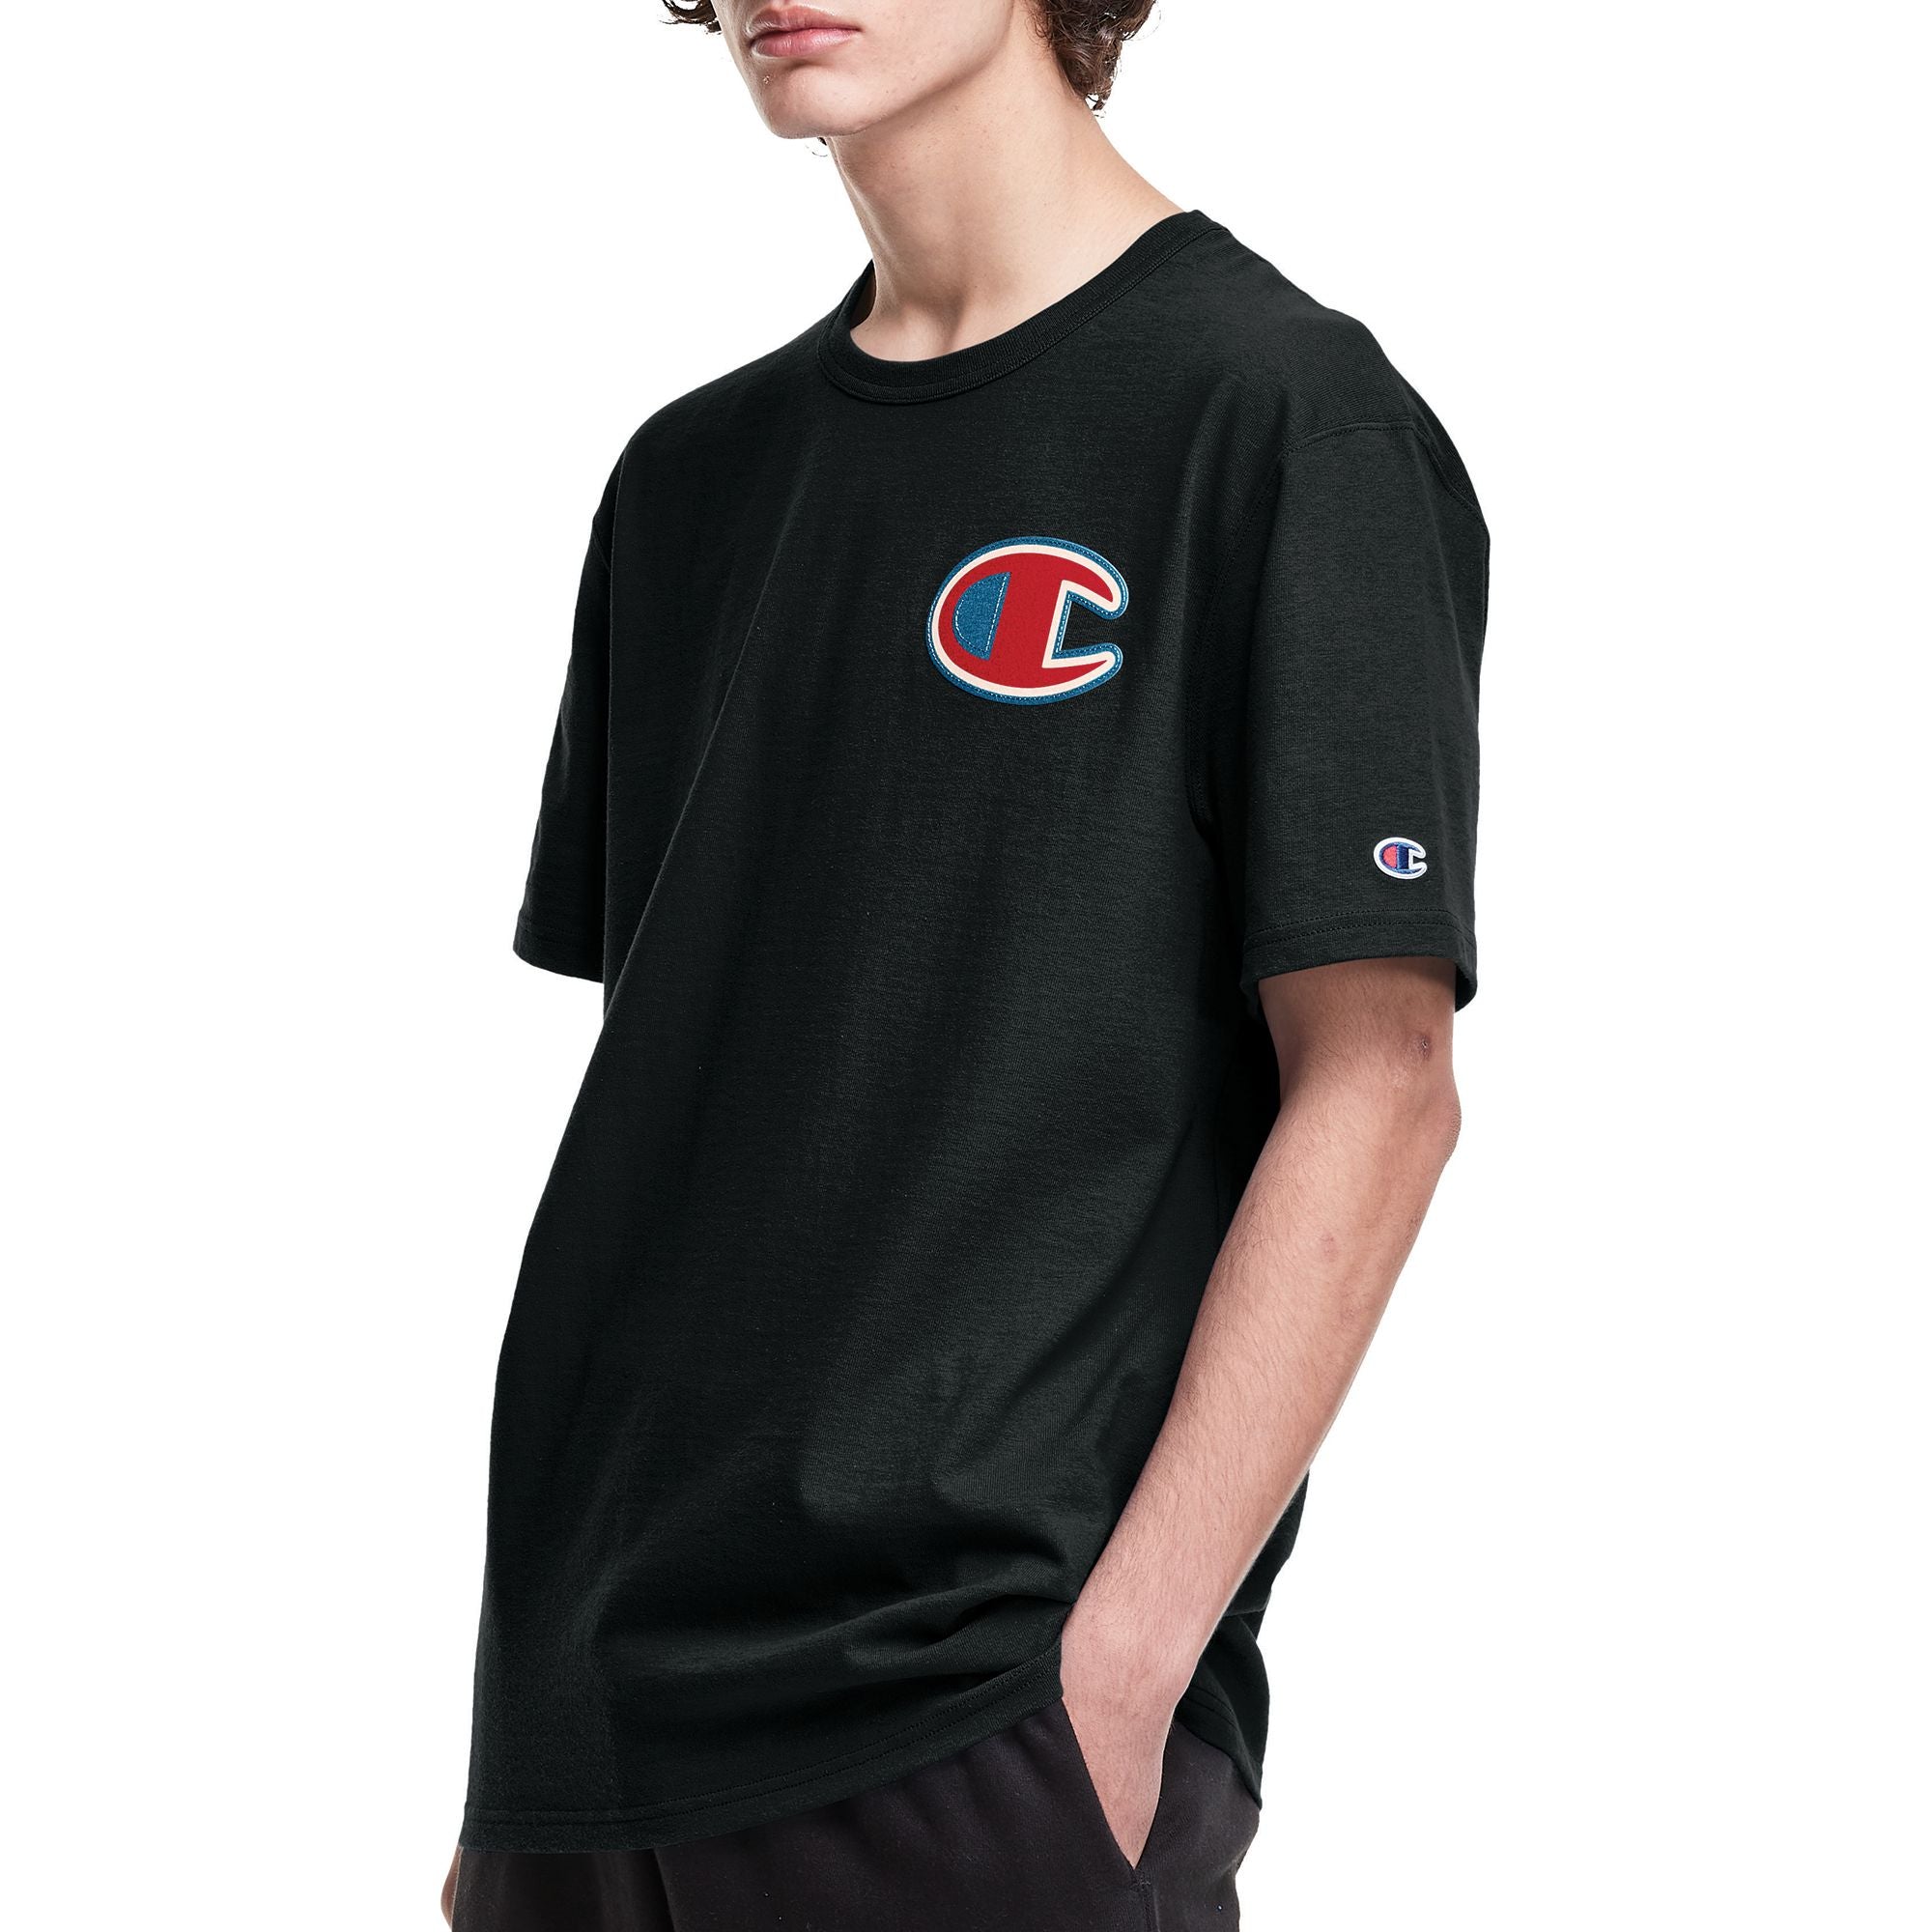 Champion Men's T-Shirt - Black